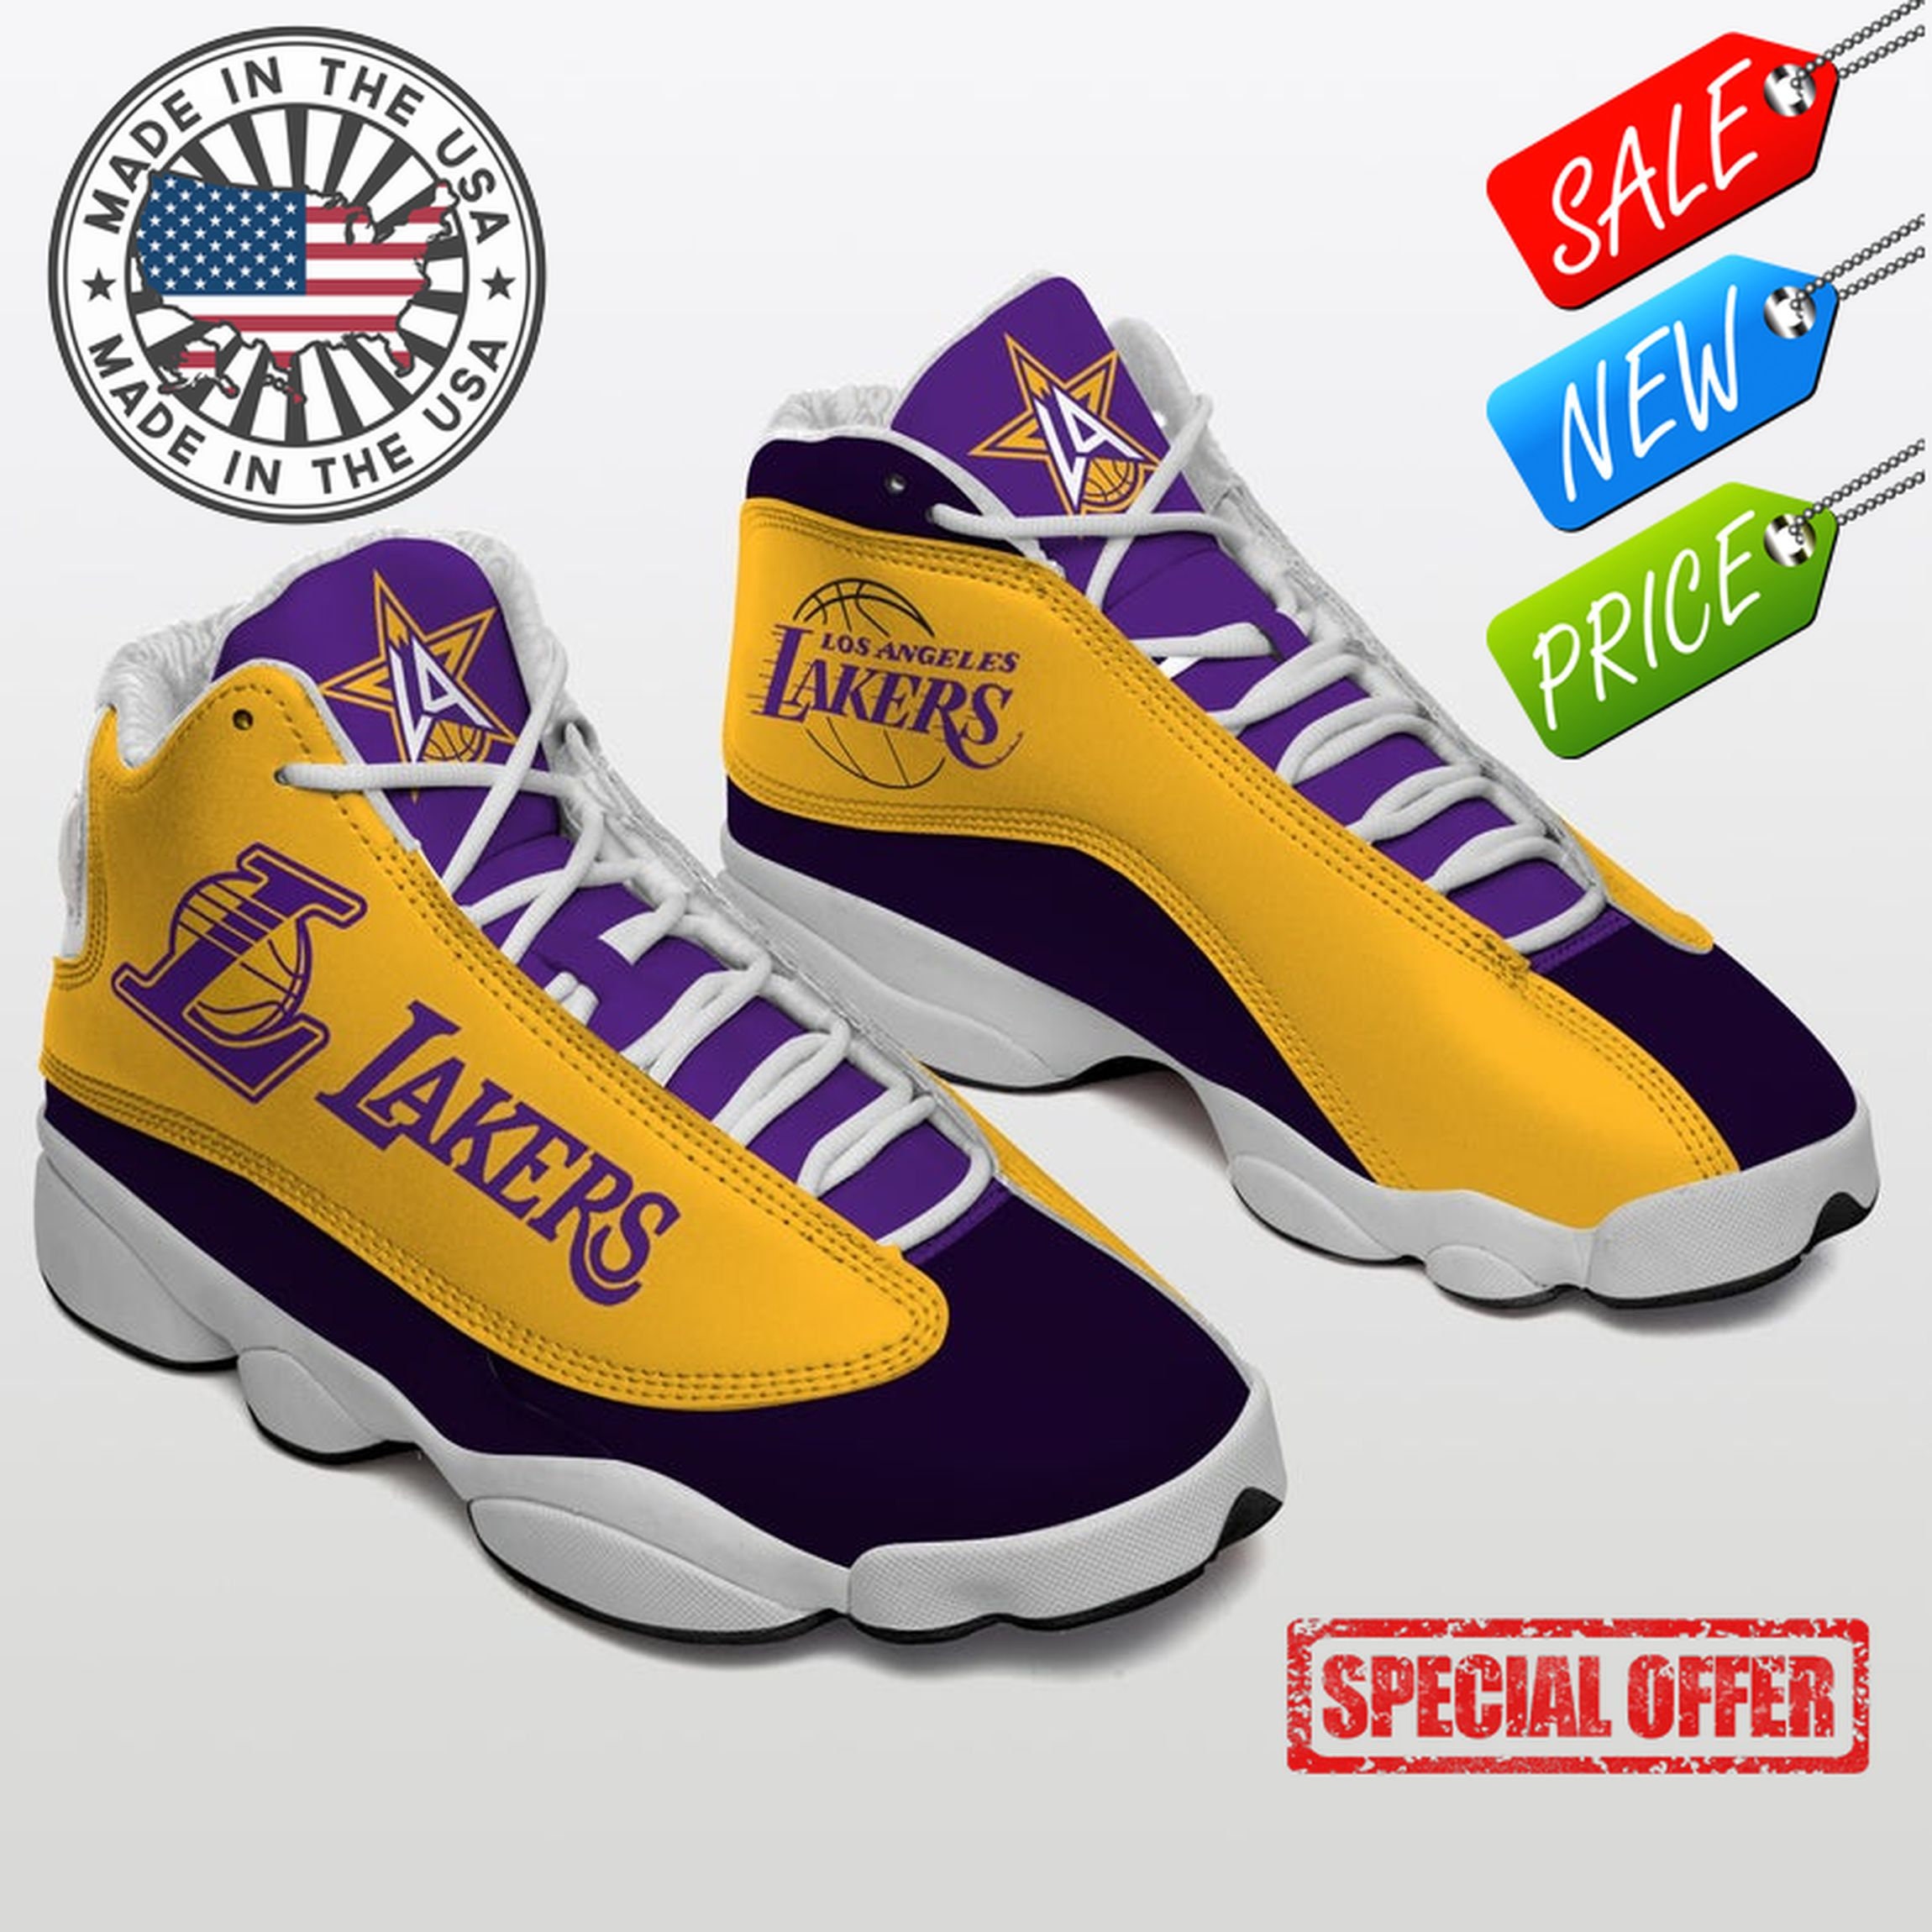 L.A Lakers Jordan 13 Shoes High neck shoes Personalized | Etsy